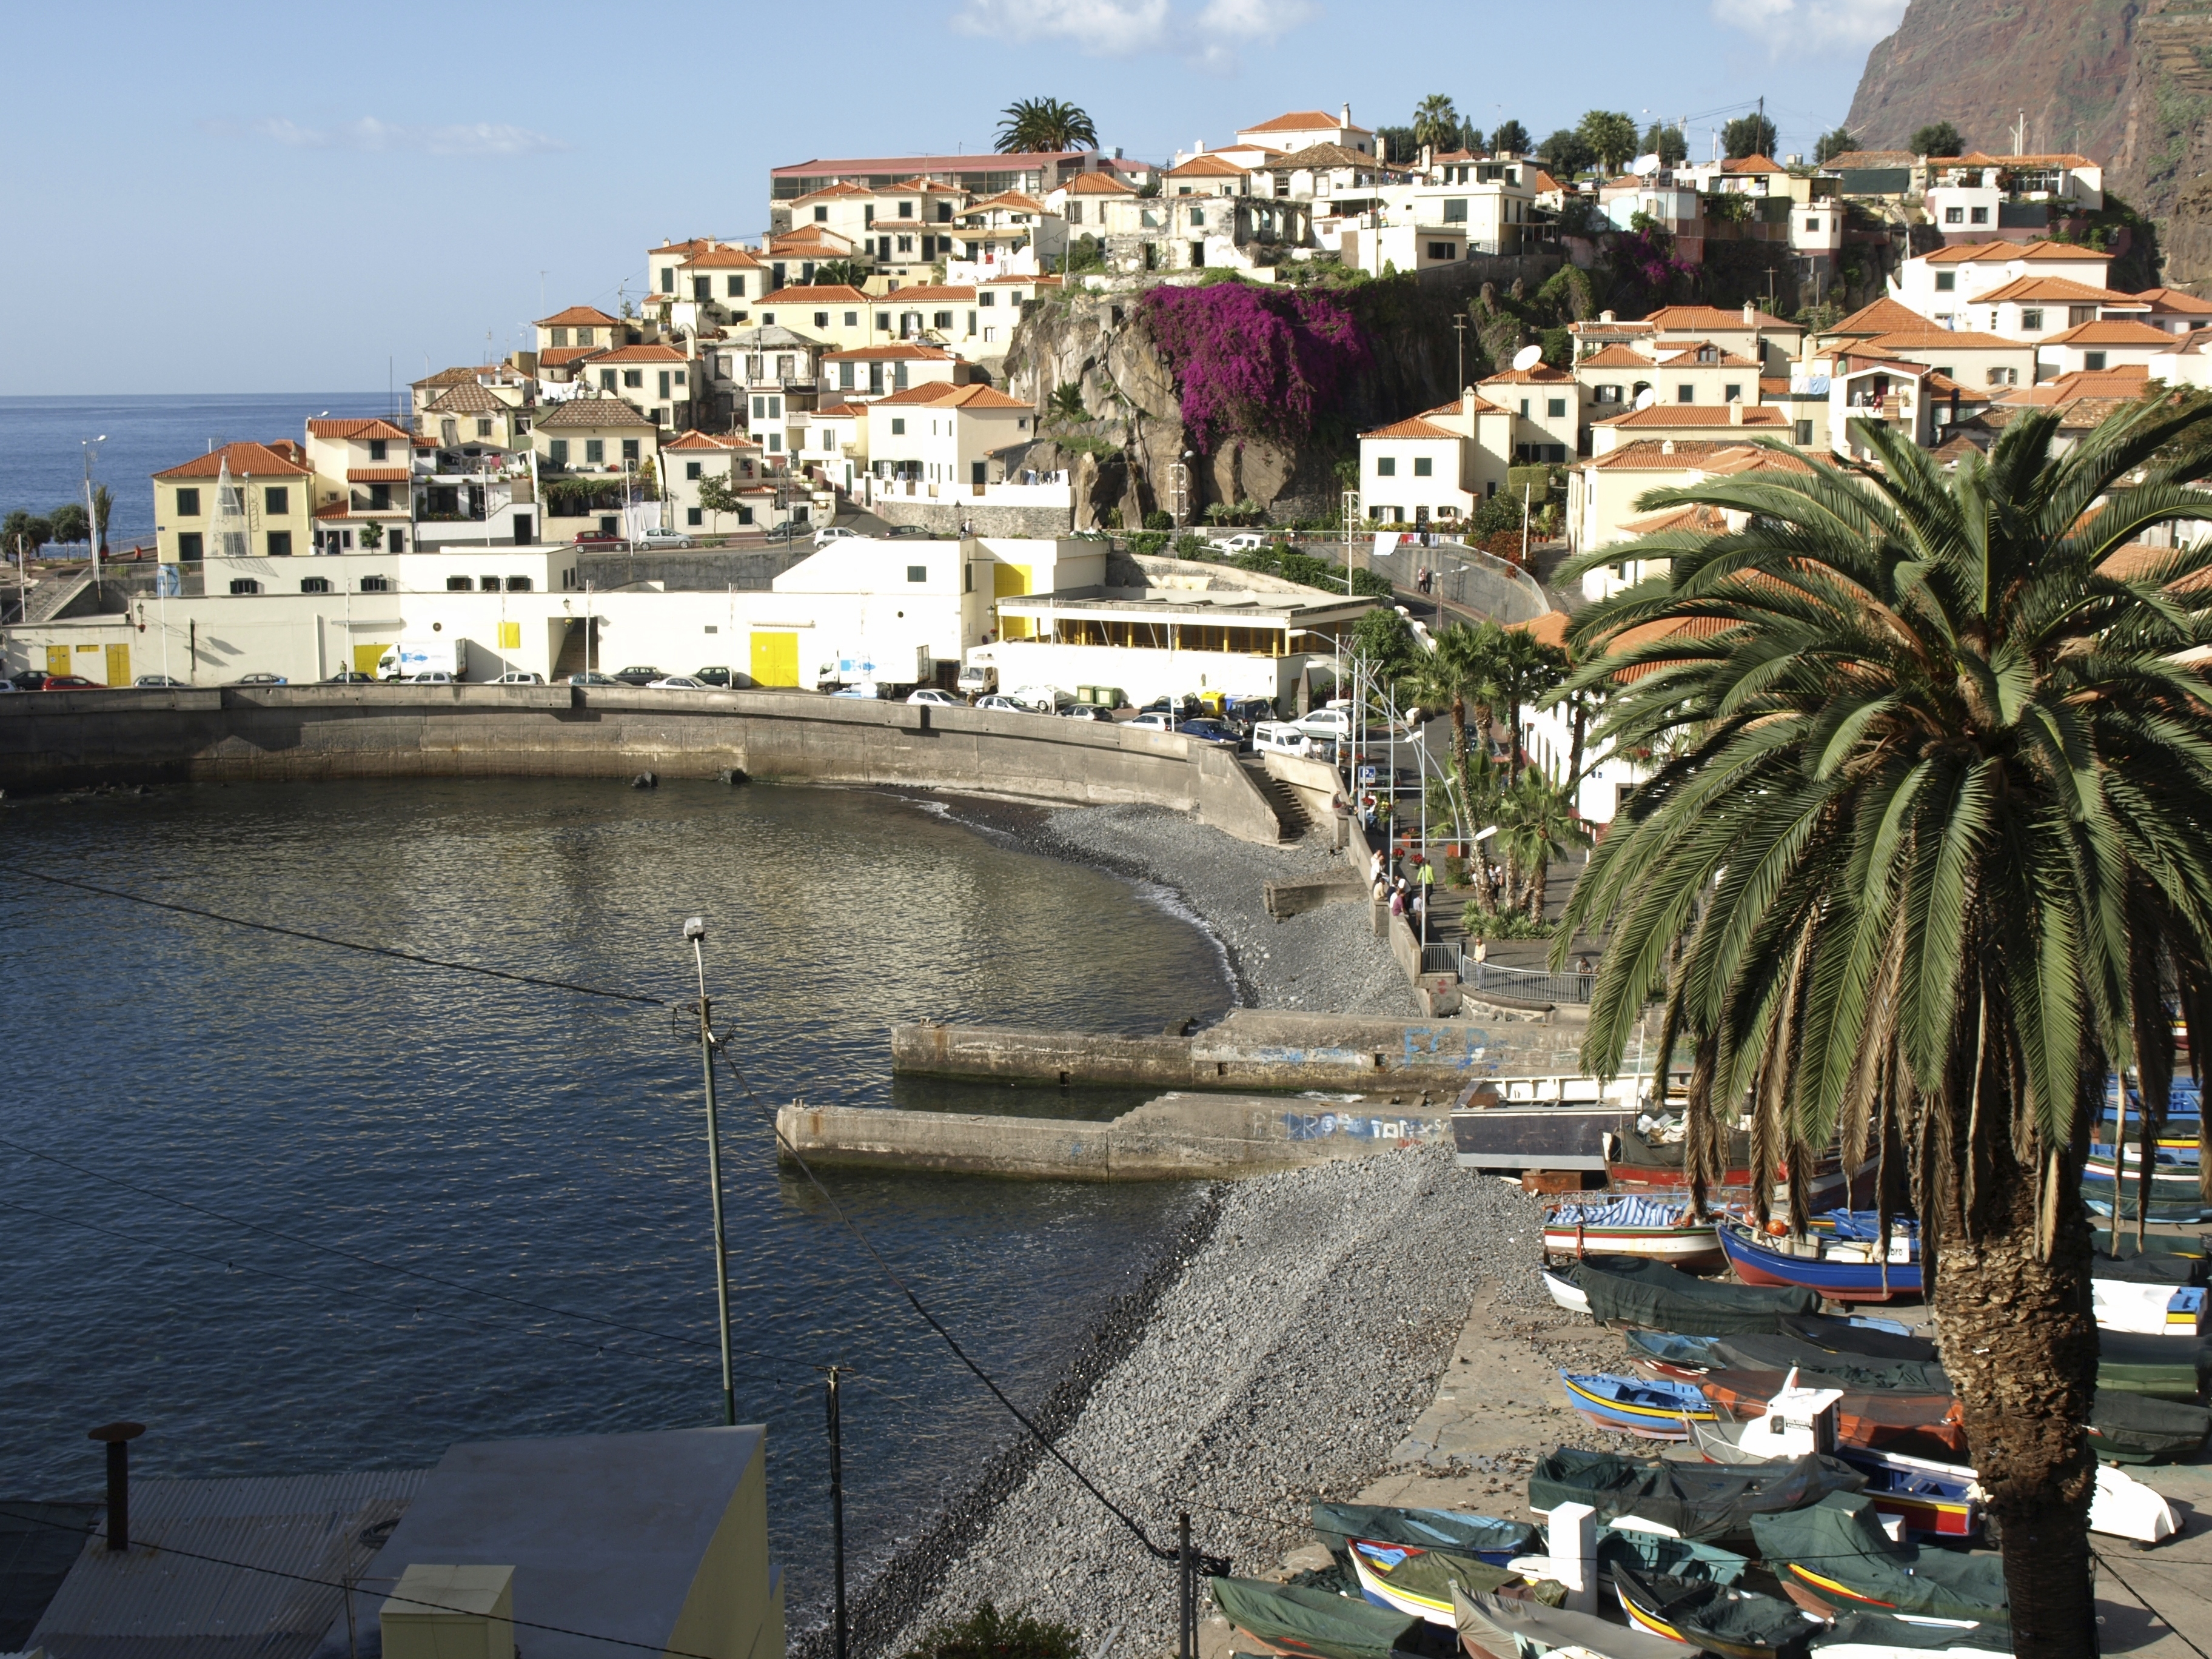 Fishing village of Camara de Lobos, Madeira